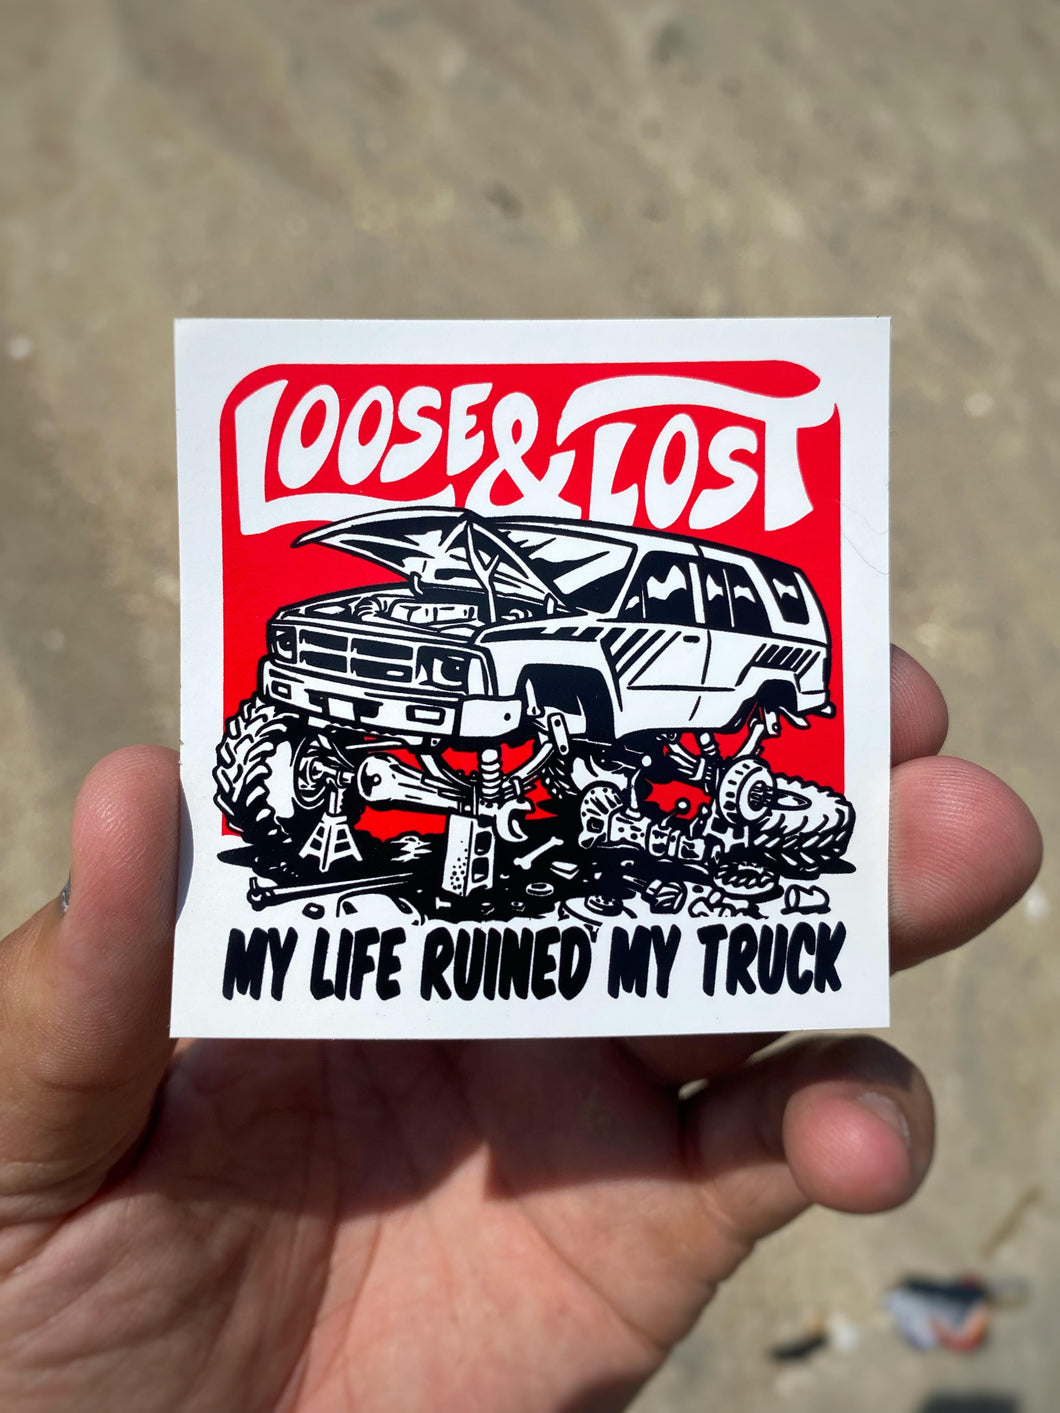 Life ruined my truck sticker